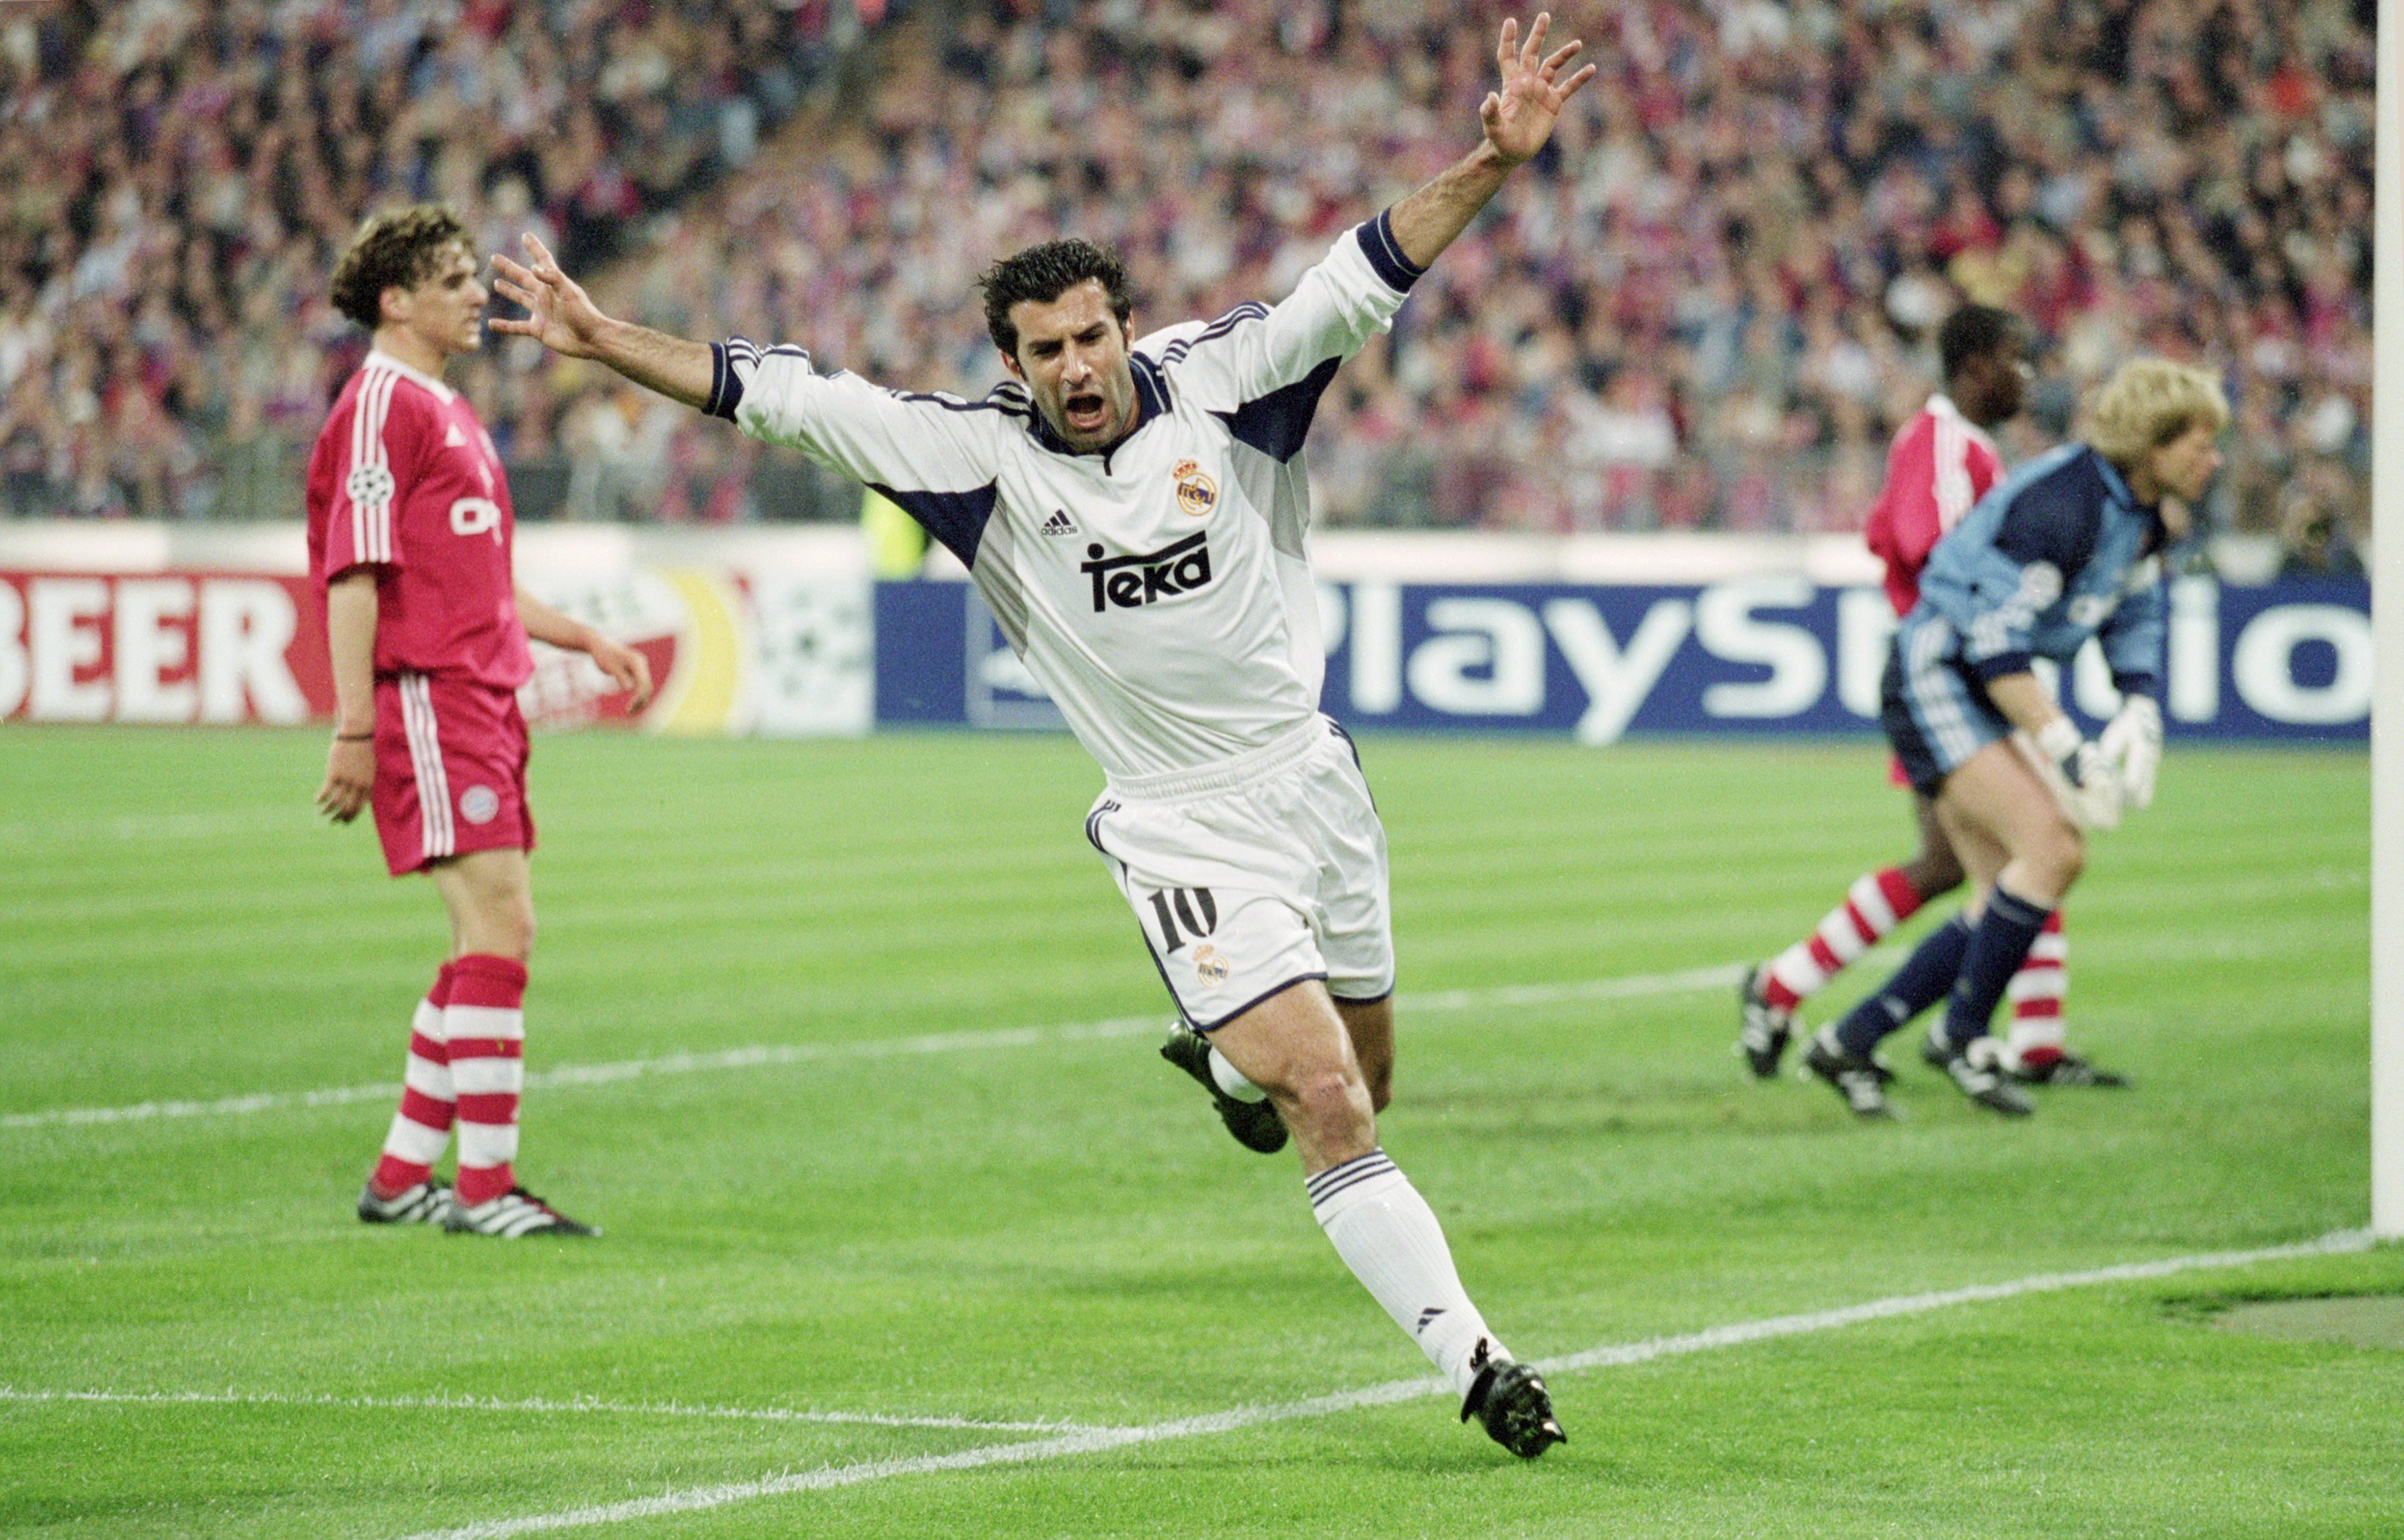 Luis Figo celebrates a goal for Real Madrid